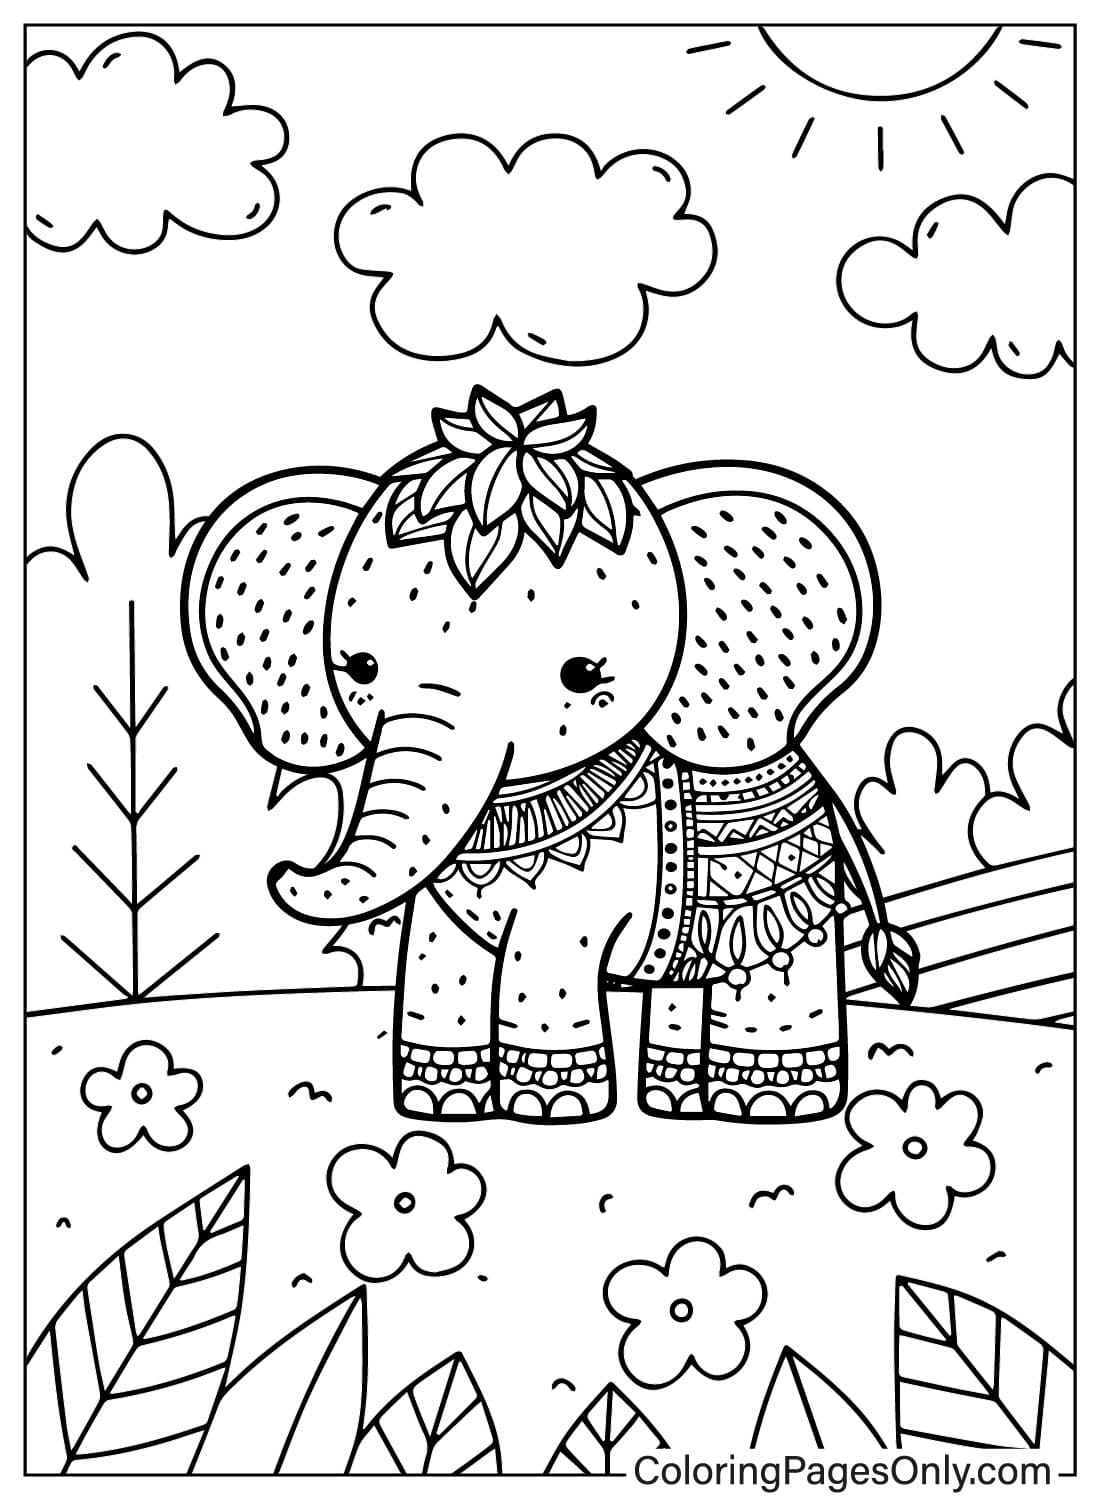 Página para colorear de Elefante de Fresa para imprimir gratis de Elefante de Fresa